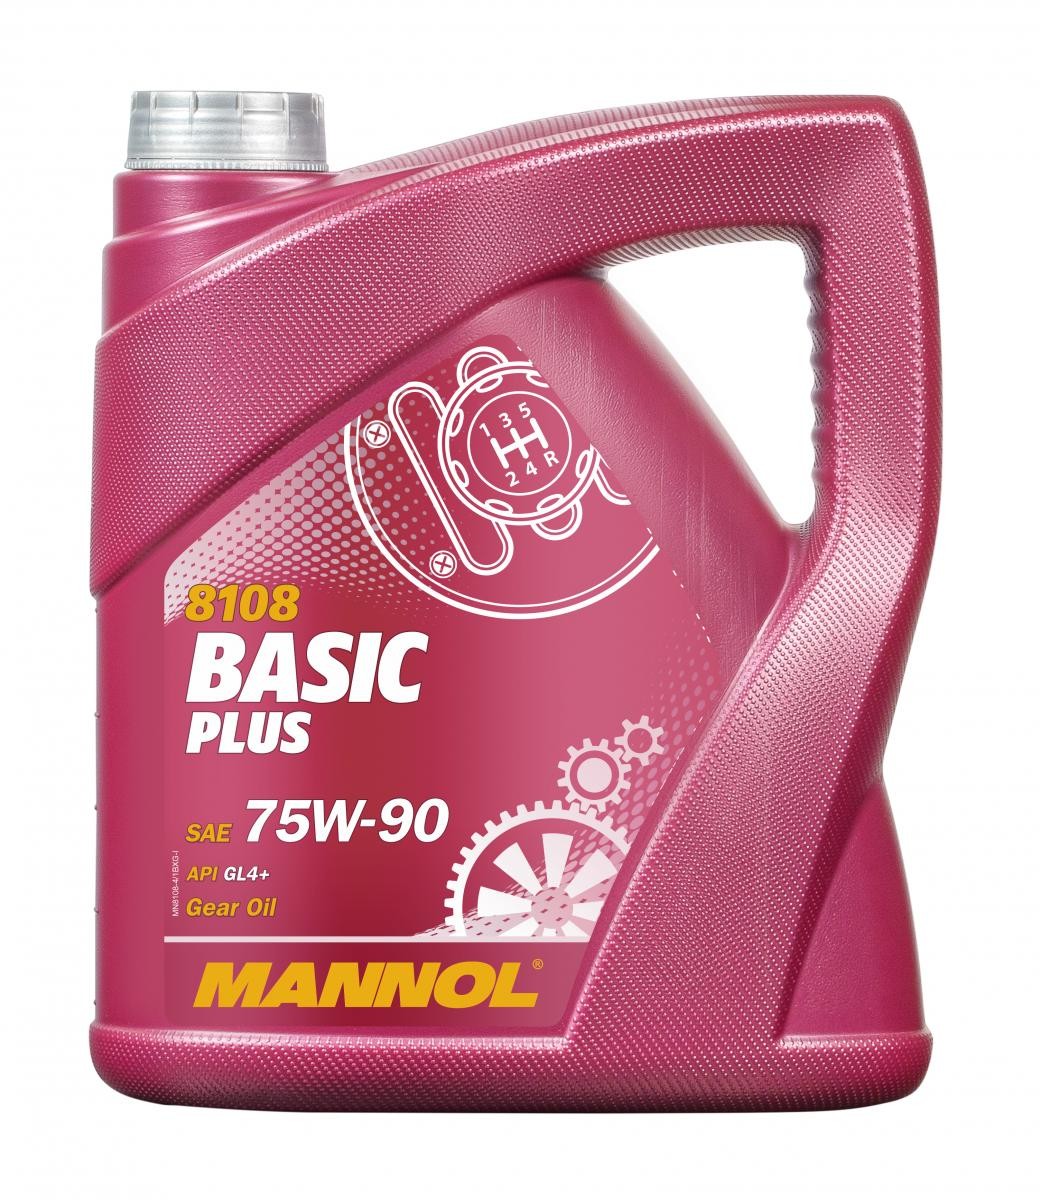 MANNOL BASIC PLUS 75W-90, Vollsynthetiköl, Inhalt: 4l MIL-L 2105, VW 501 50 Getriebeöl MN8108-4 kaufen